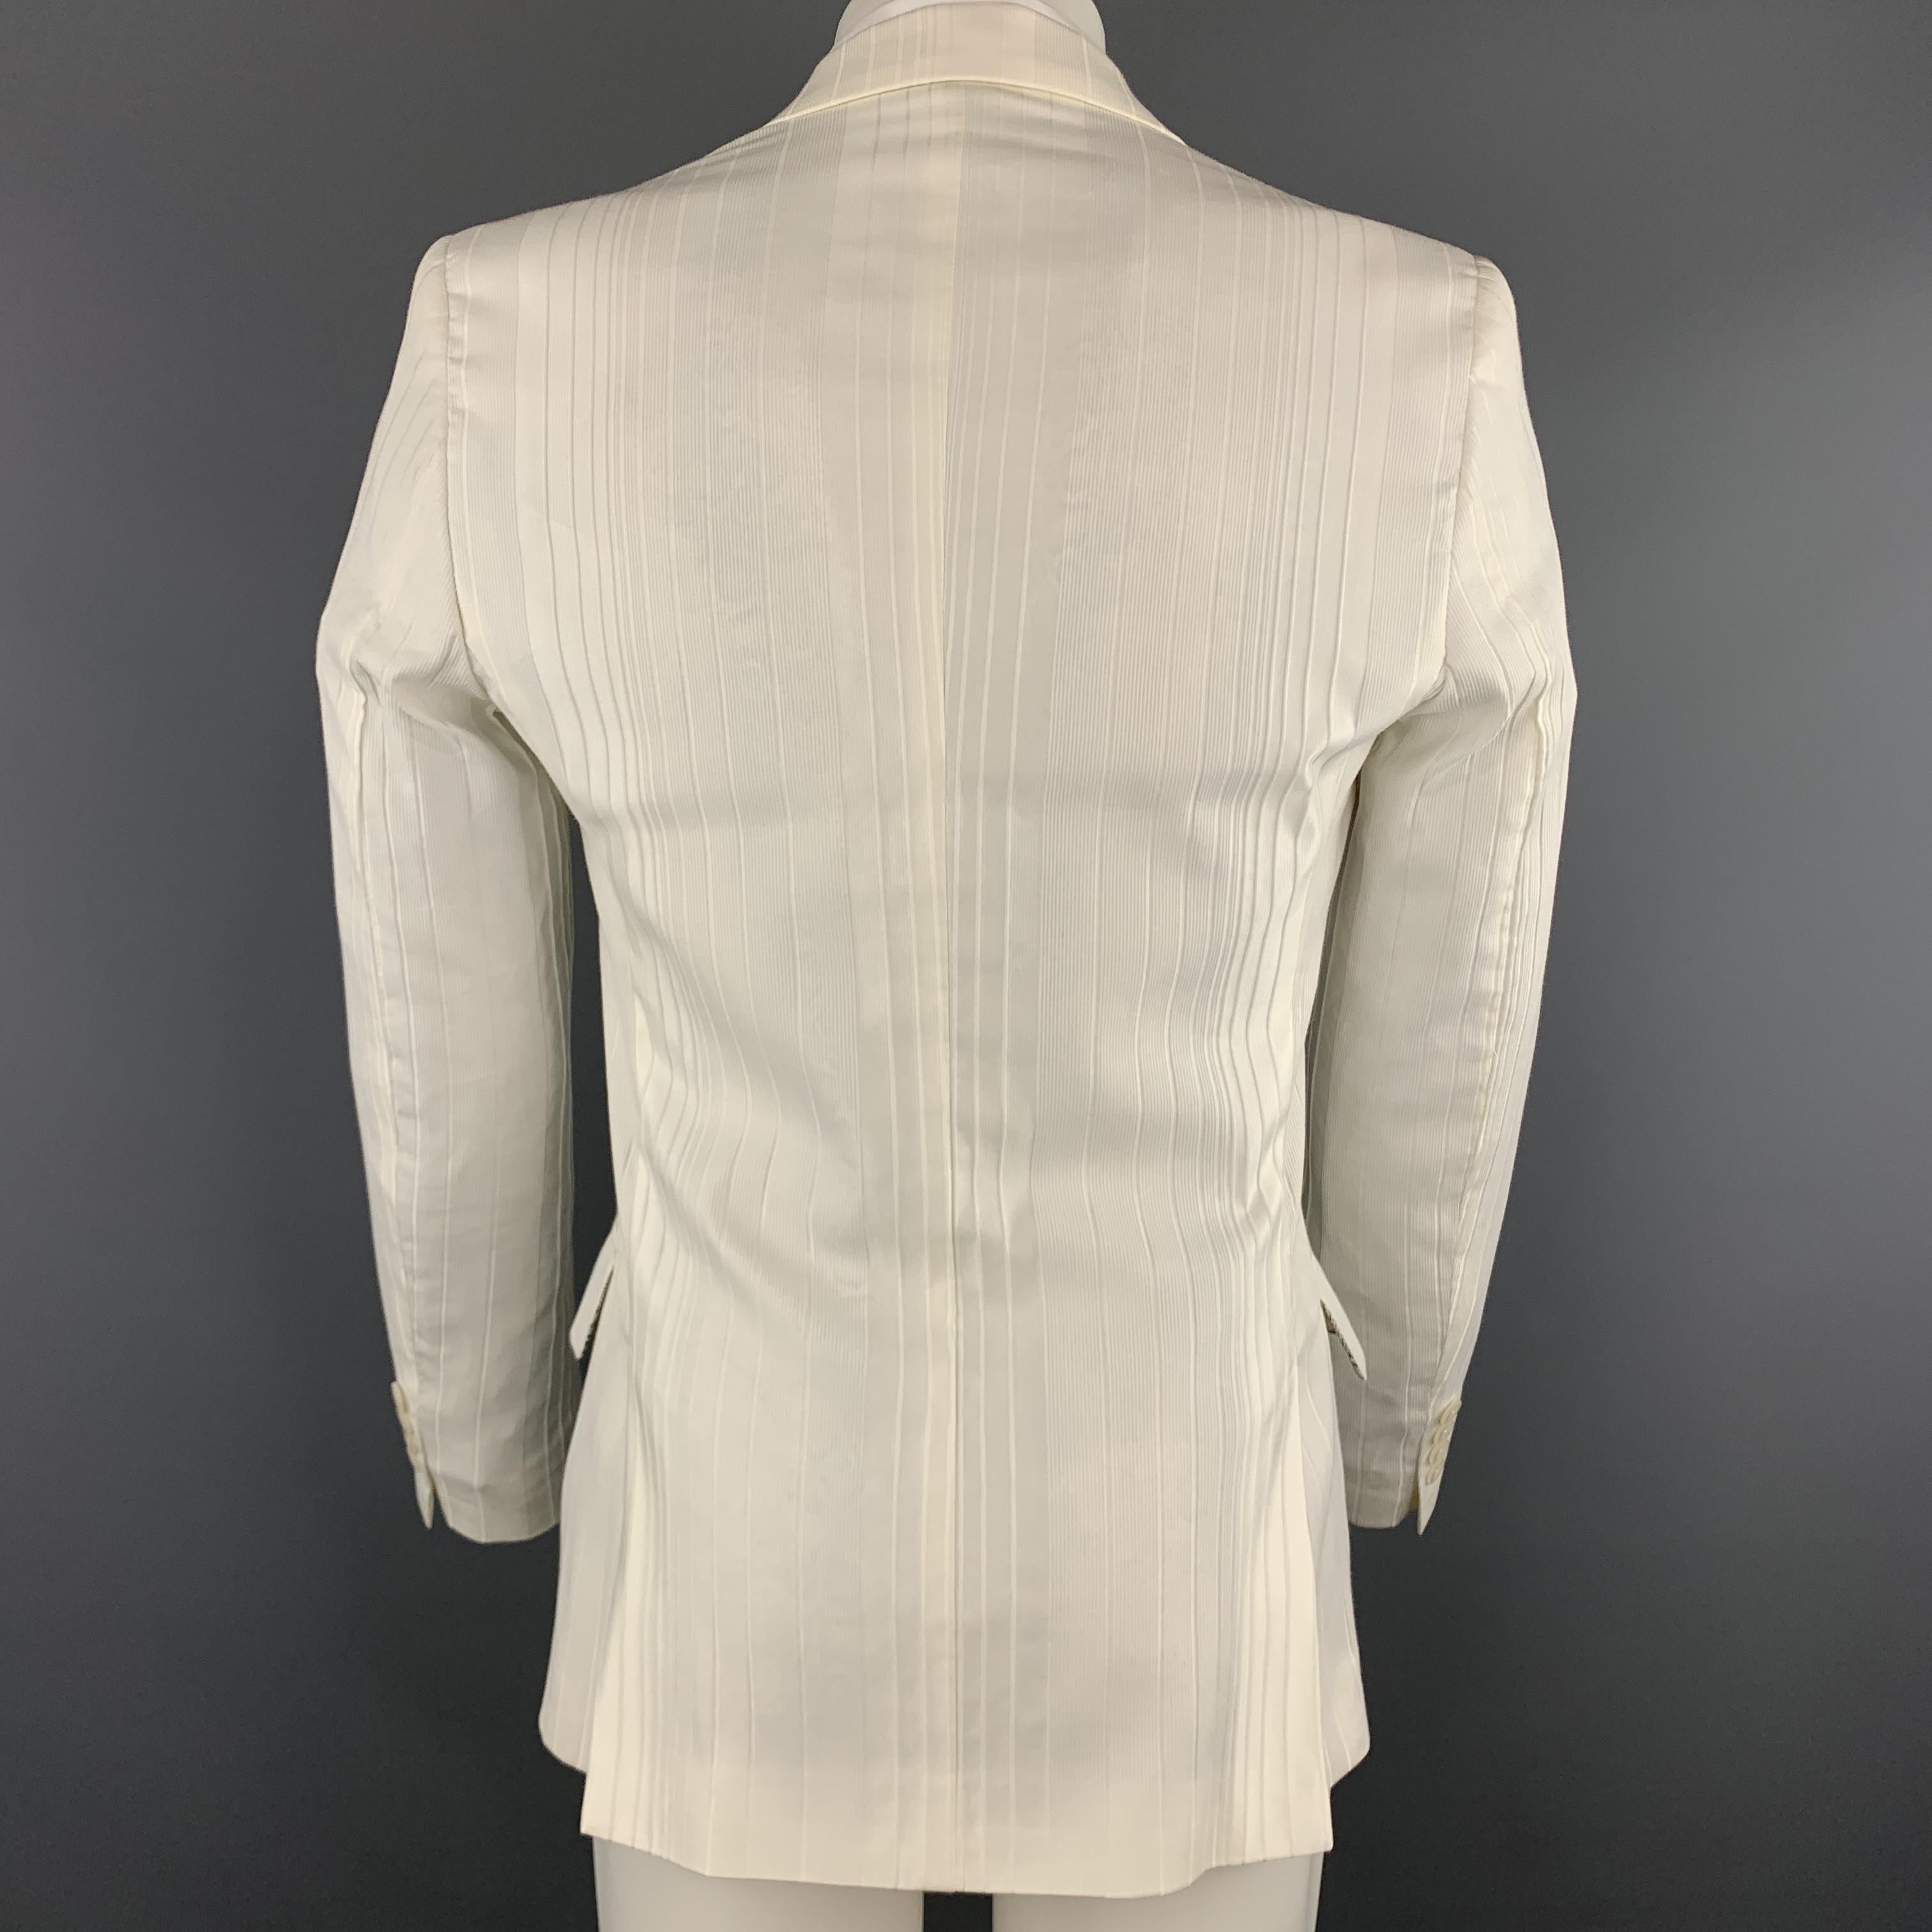 JUST CAVALLI Size 38 White Striped Textured Cotton Blend Peak Lapel Sport Coat 3